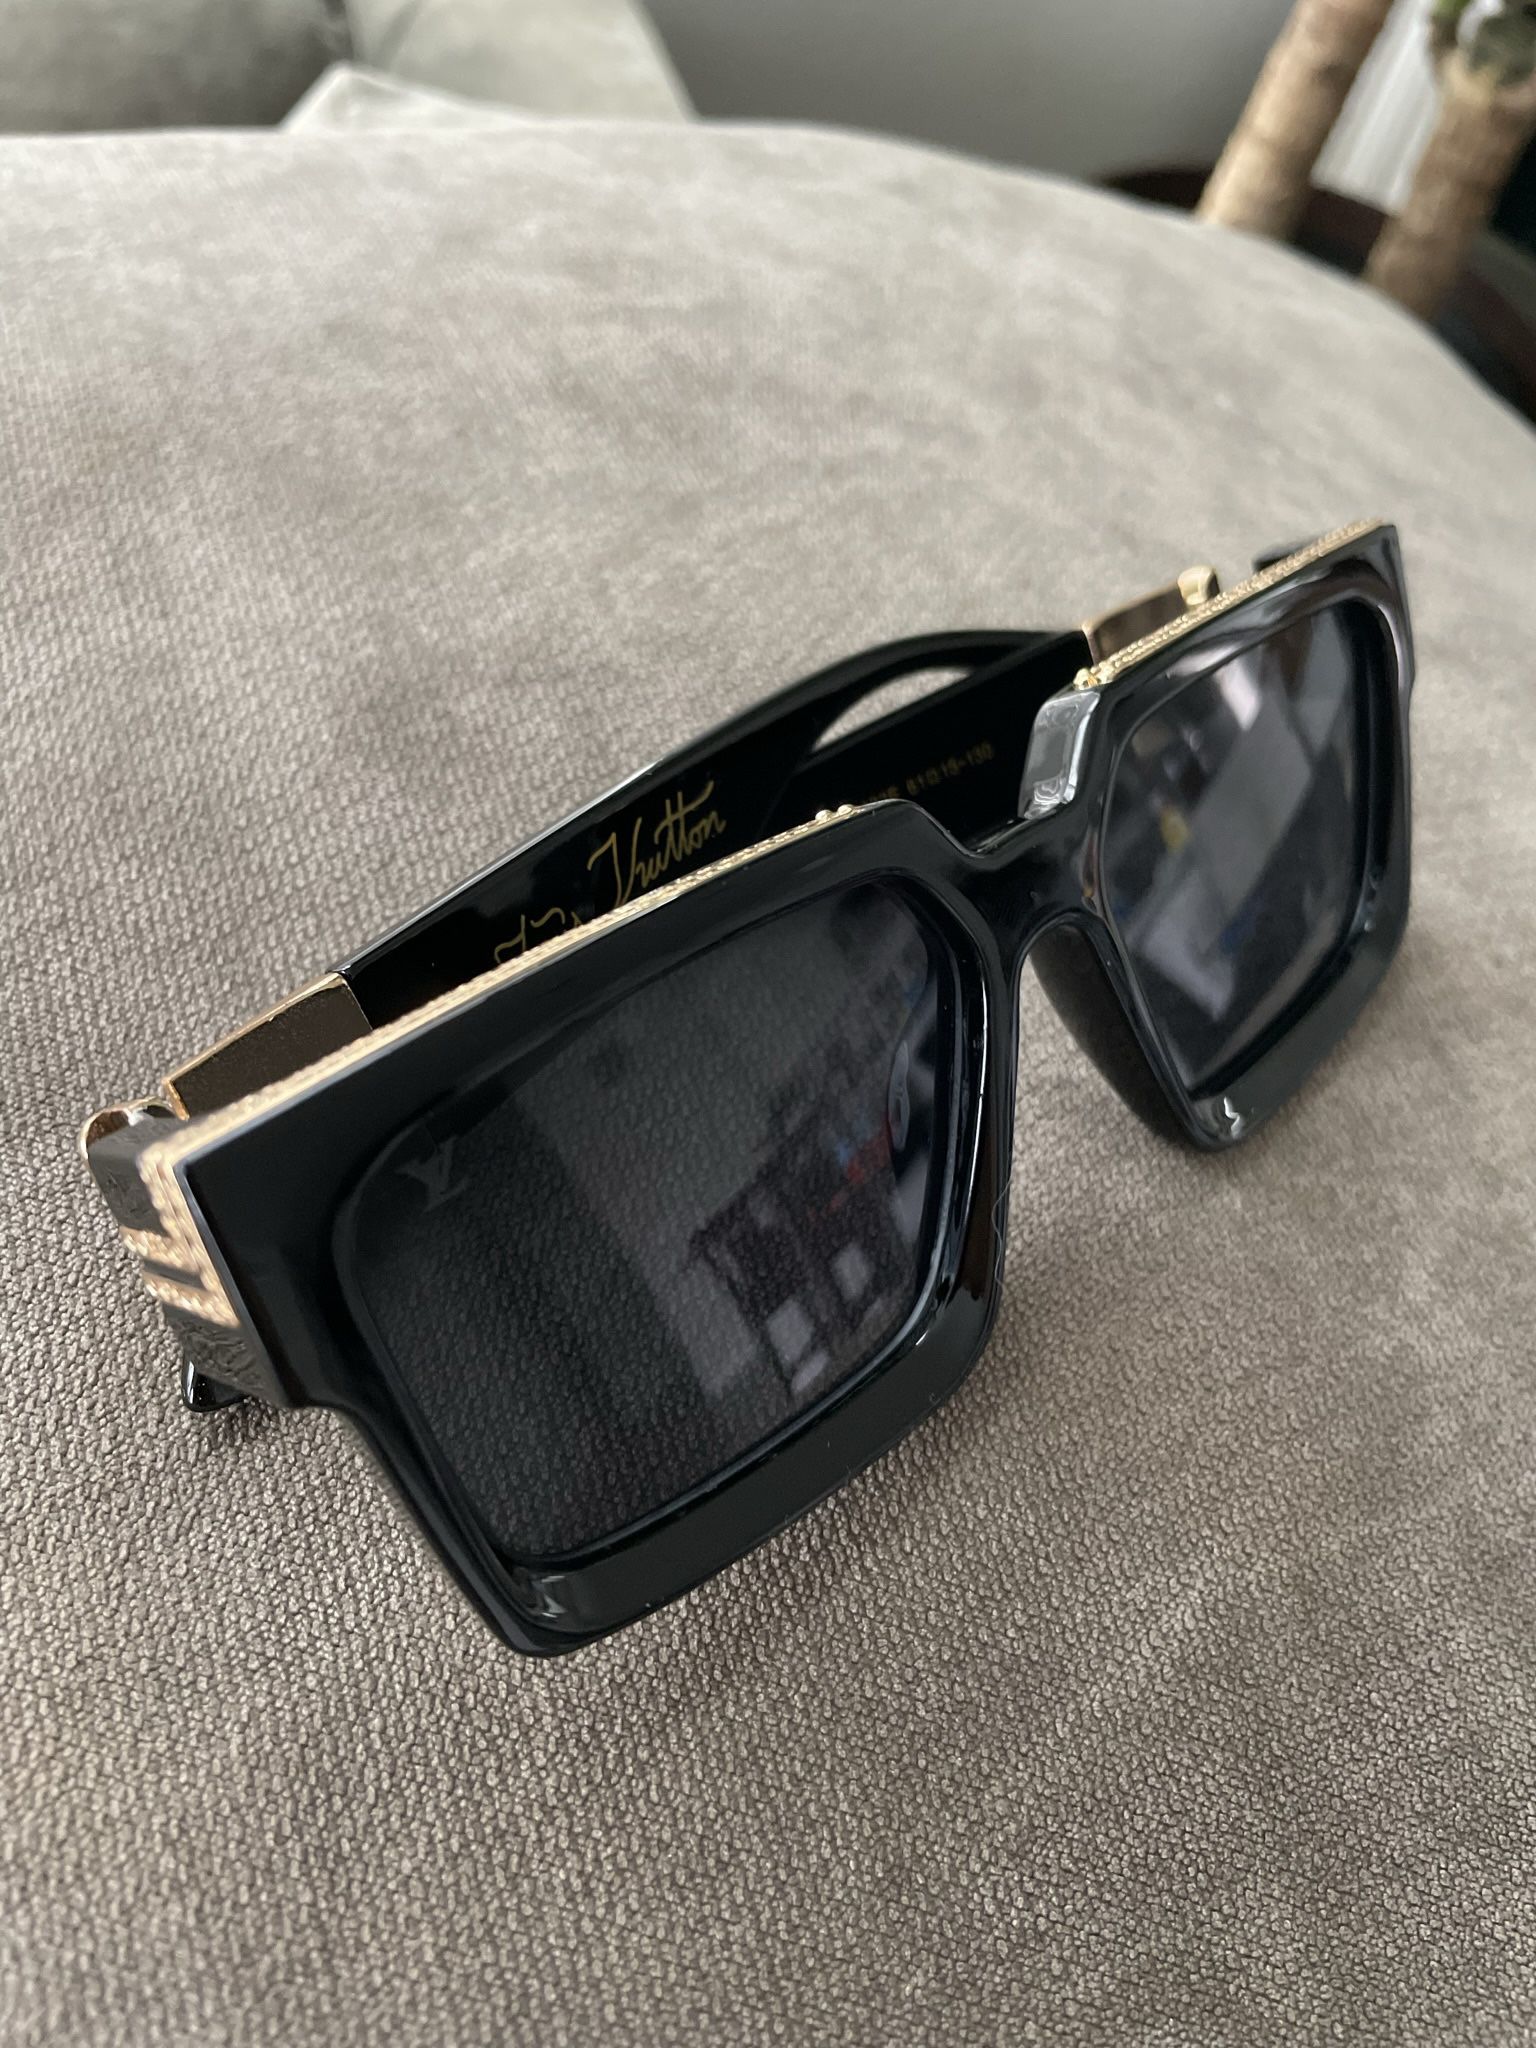 Luis Vuitton Millionaires 1.1 Sunglasses. for Sale in Houston, TX - OfferUp